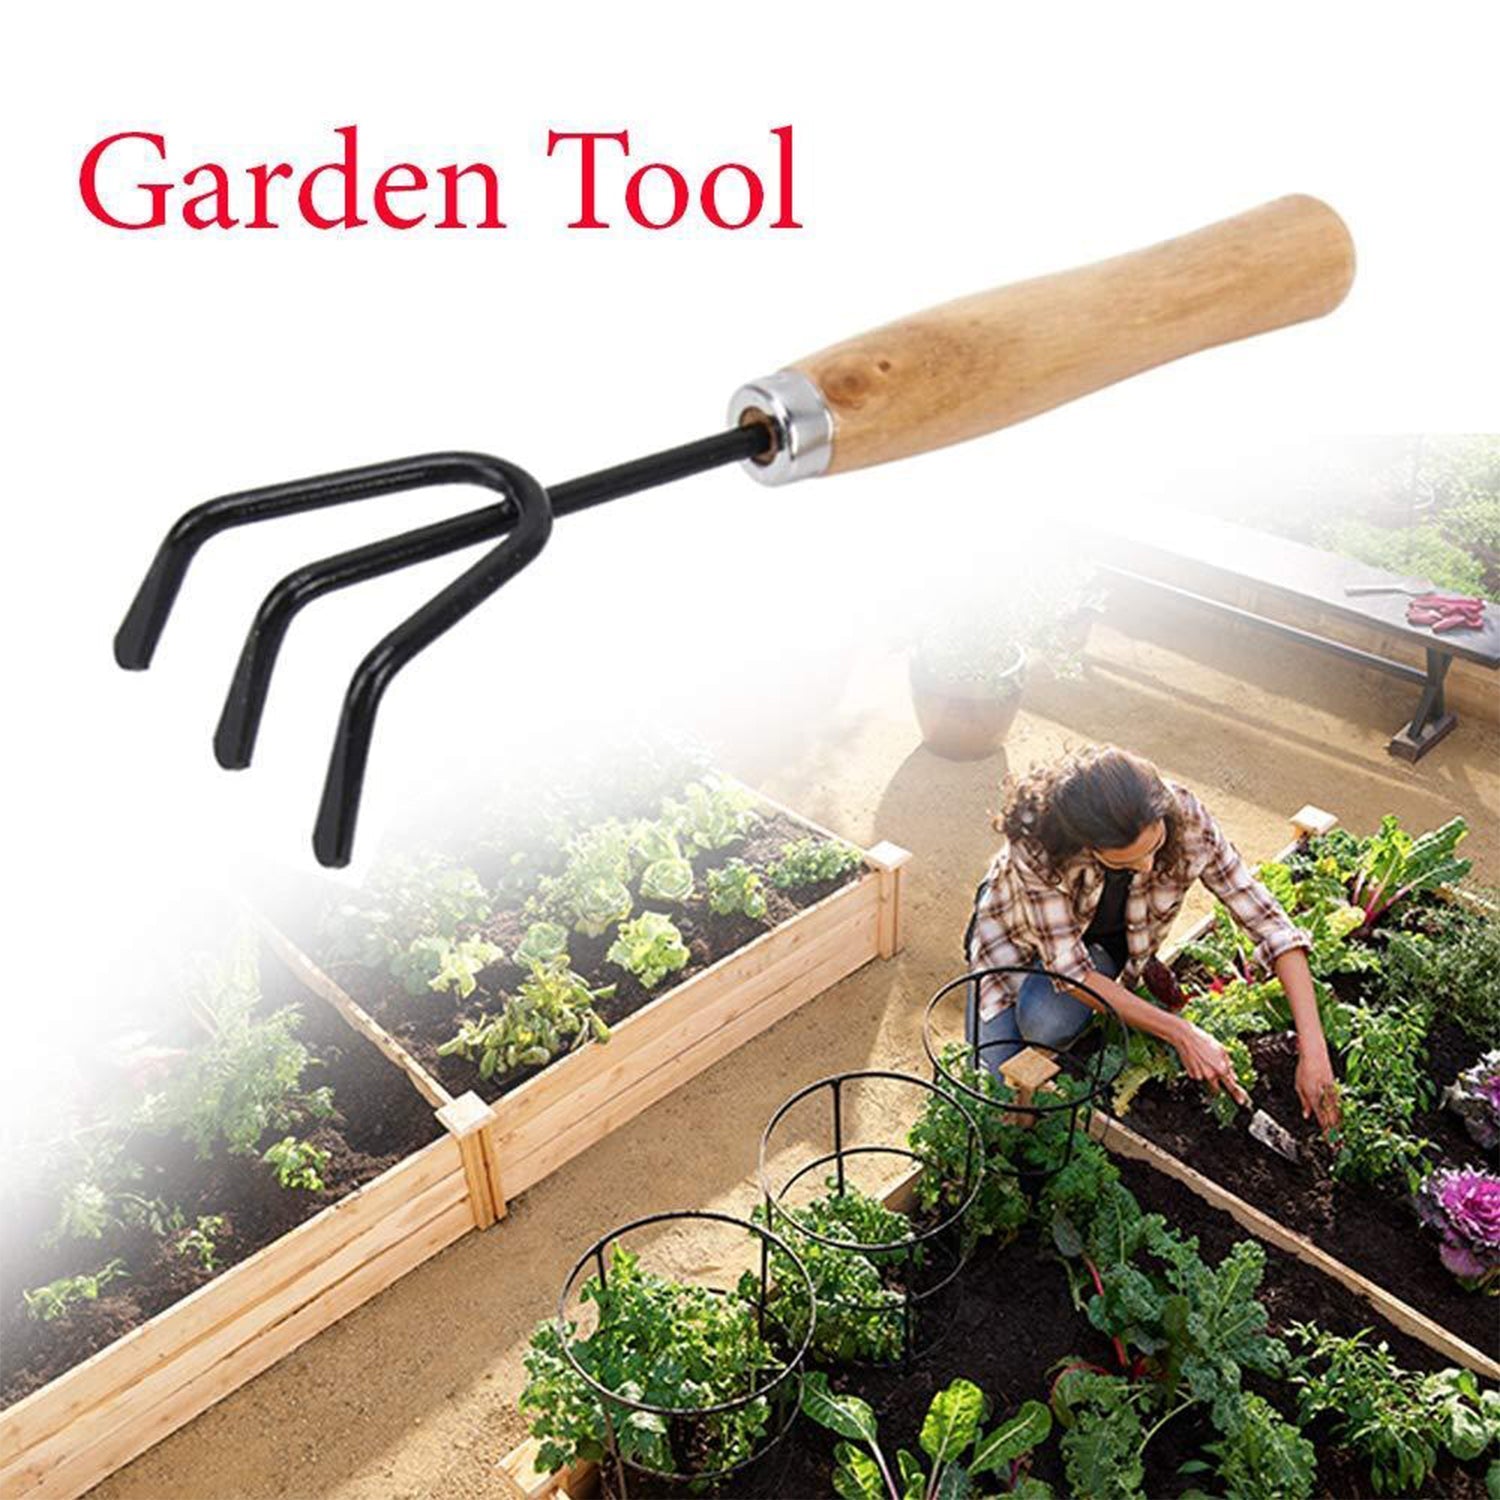 0542A 3pc Small Gardening Tools for Home Garden (Hand Cultivator, Small Trowel, Garden Fork) DeoDap